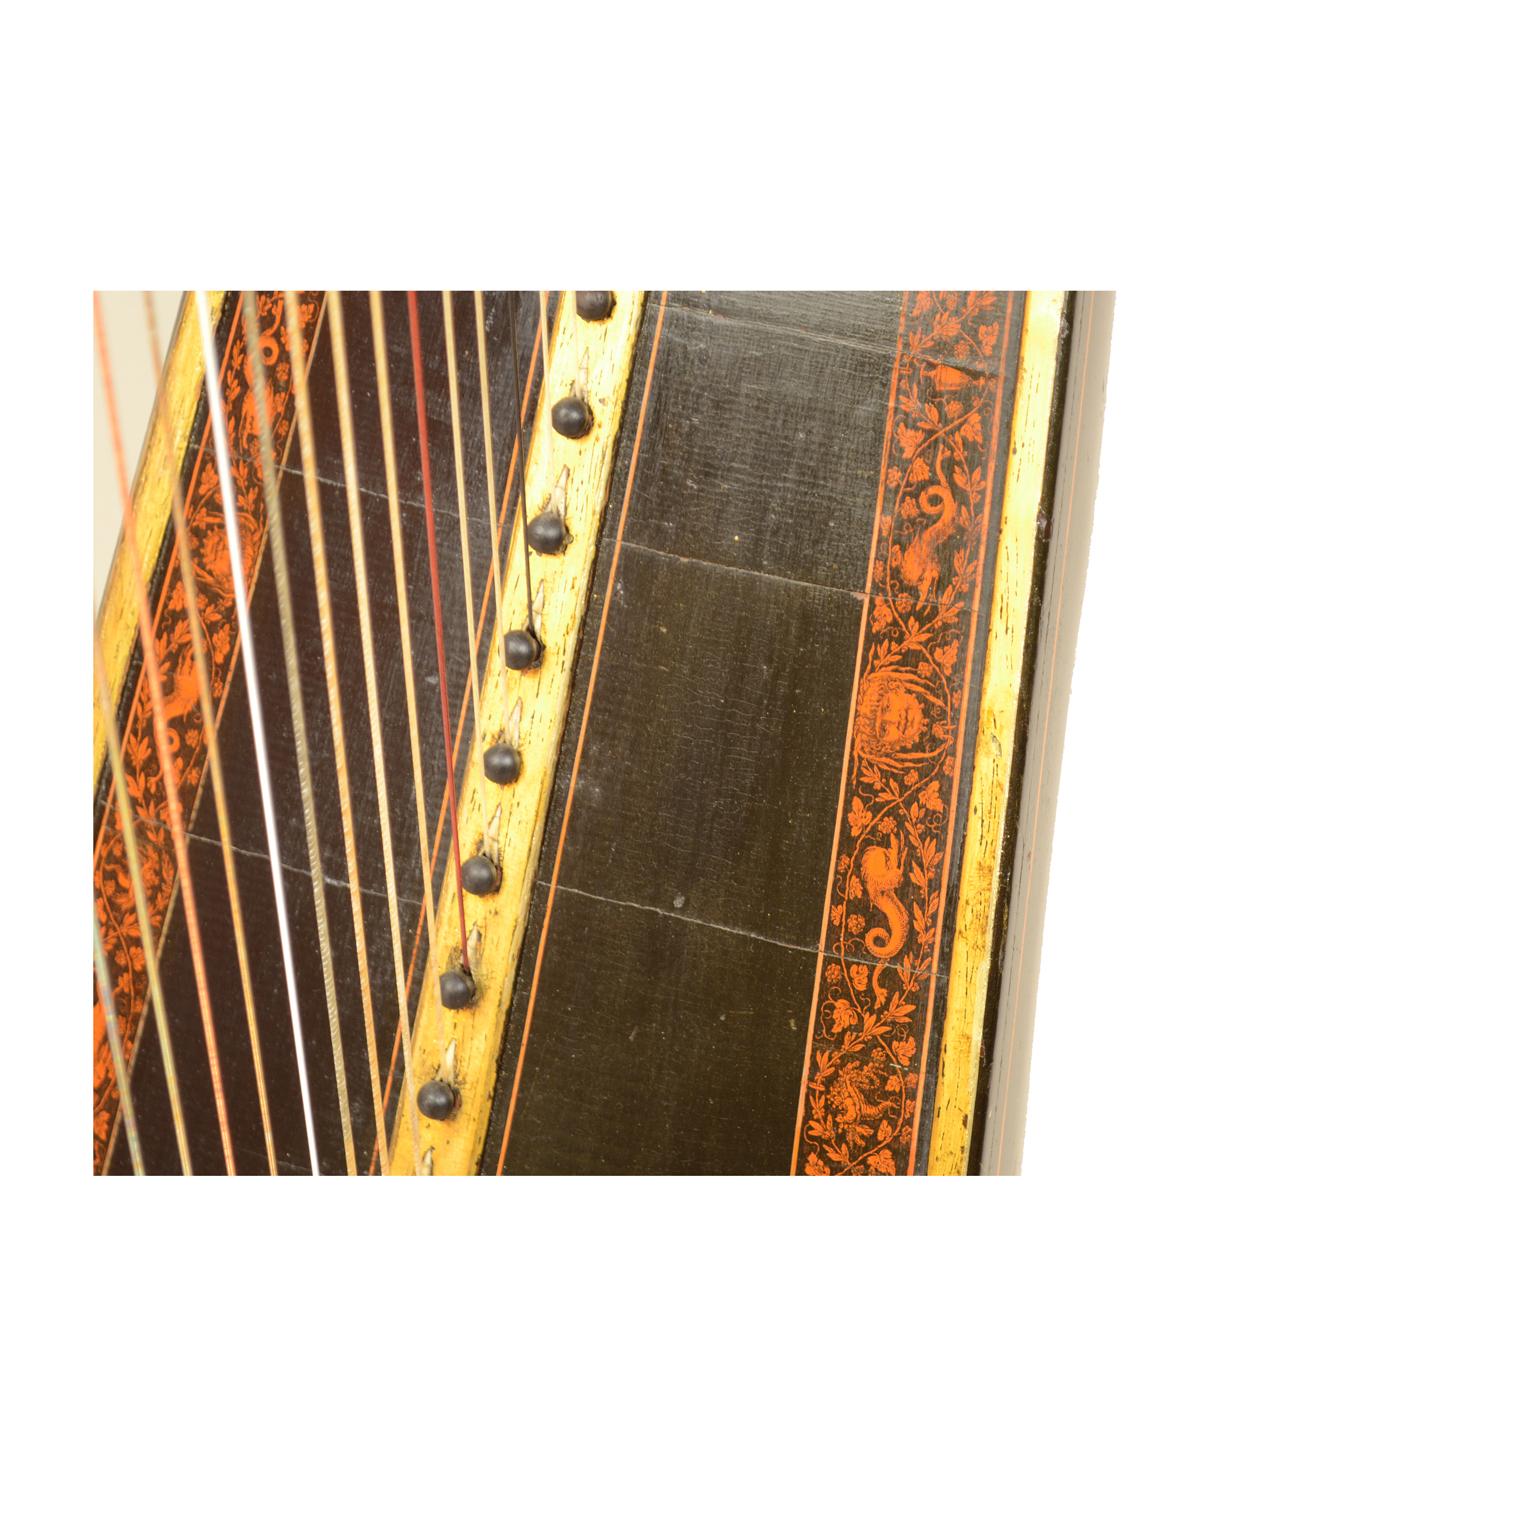 Harp Signed by Sebastian Erard's Patent Harp N. 881 N. 18, 1808-1809 5